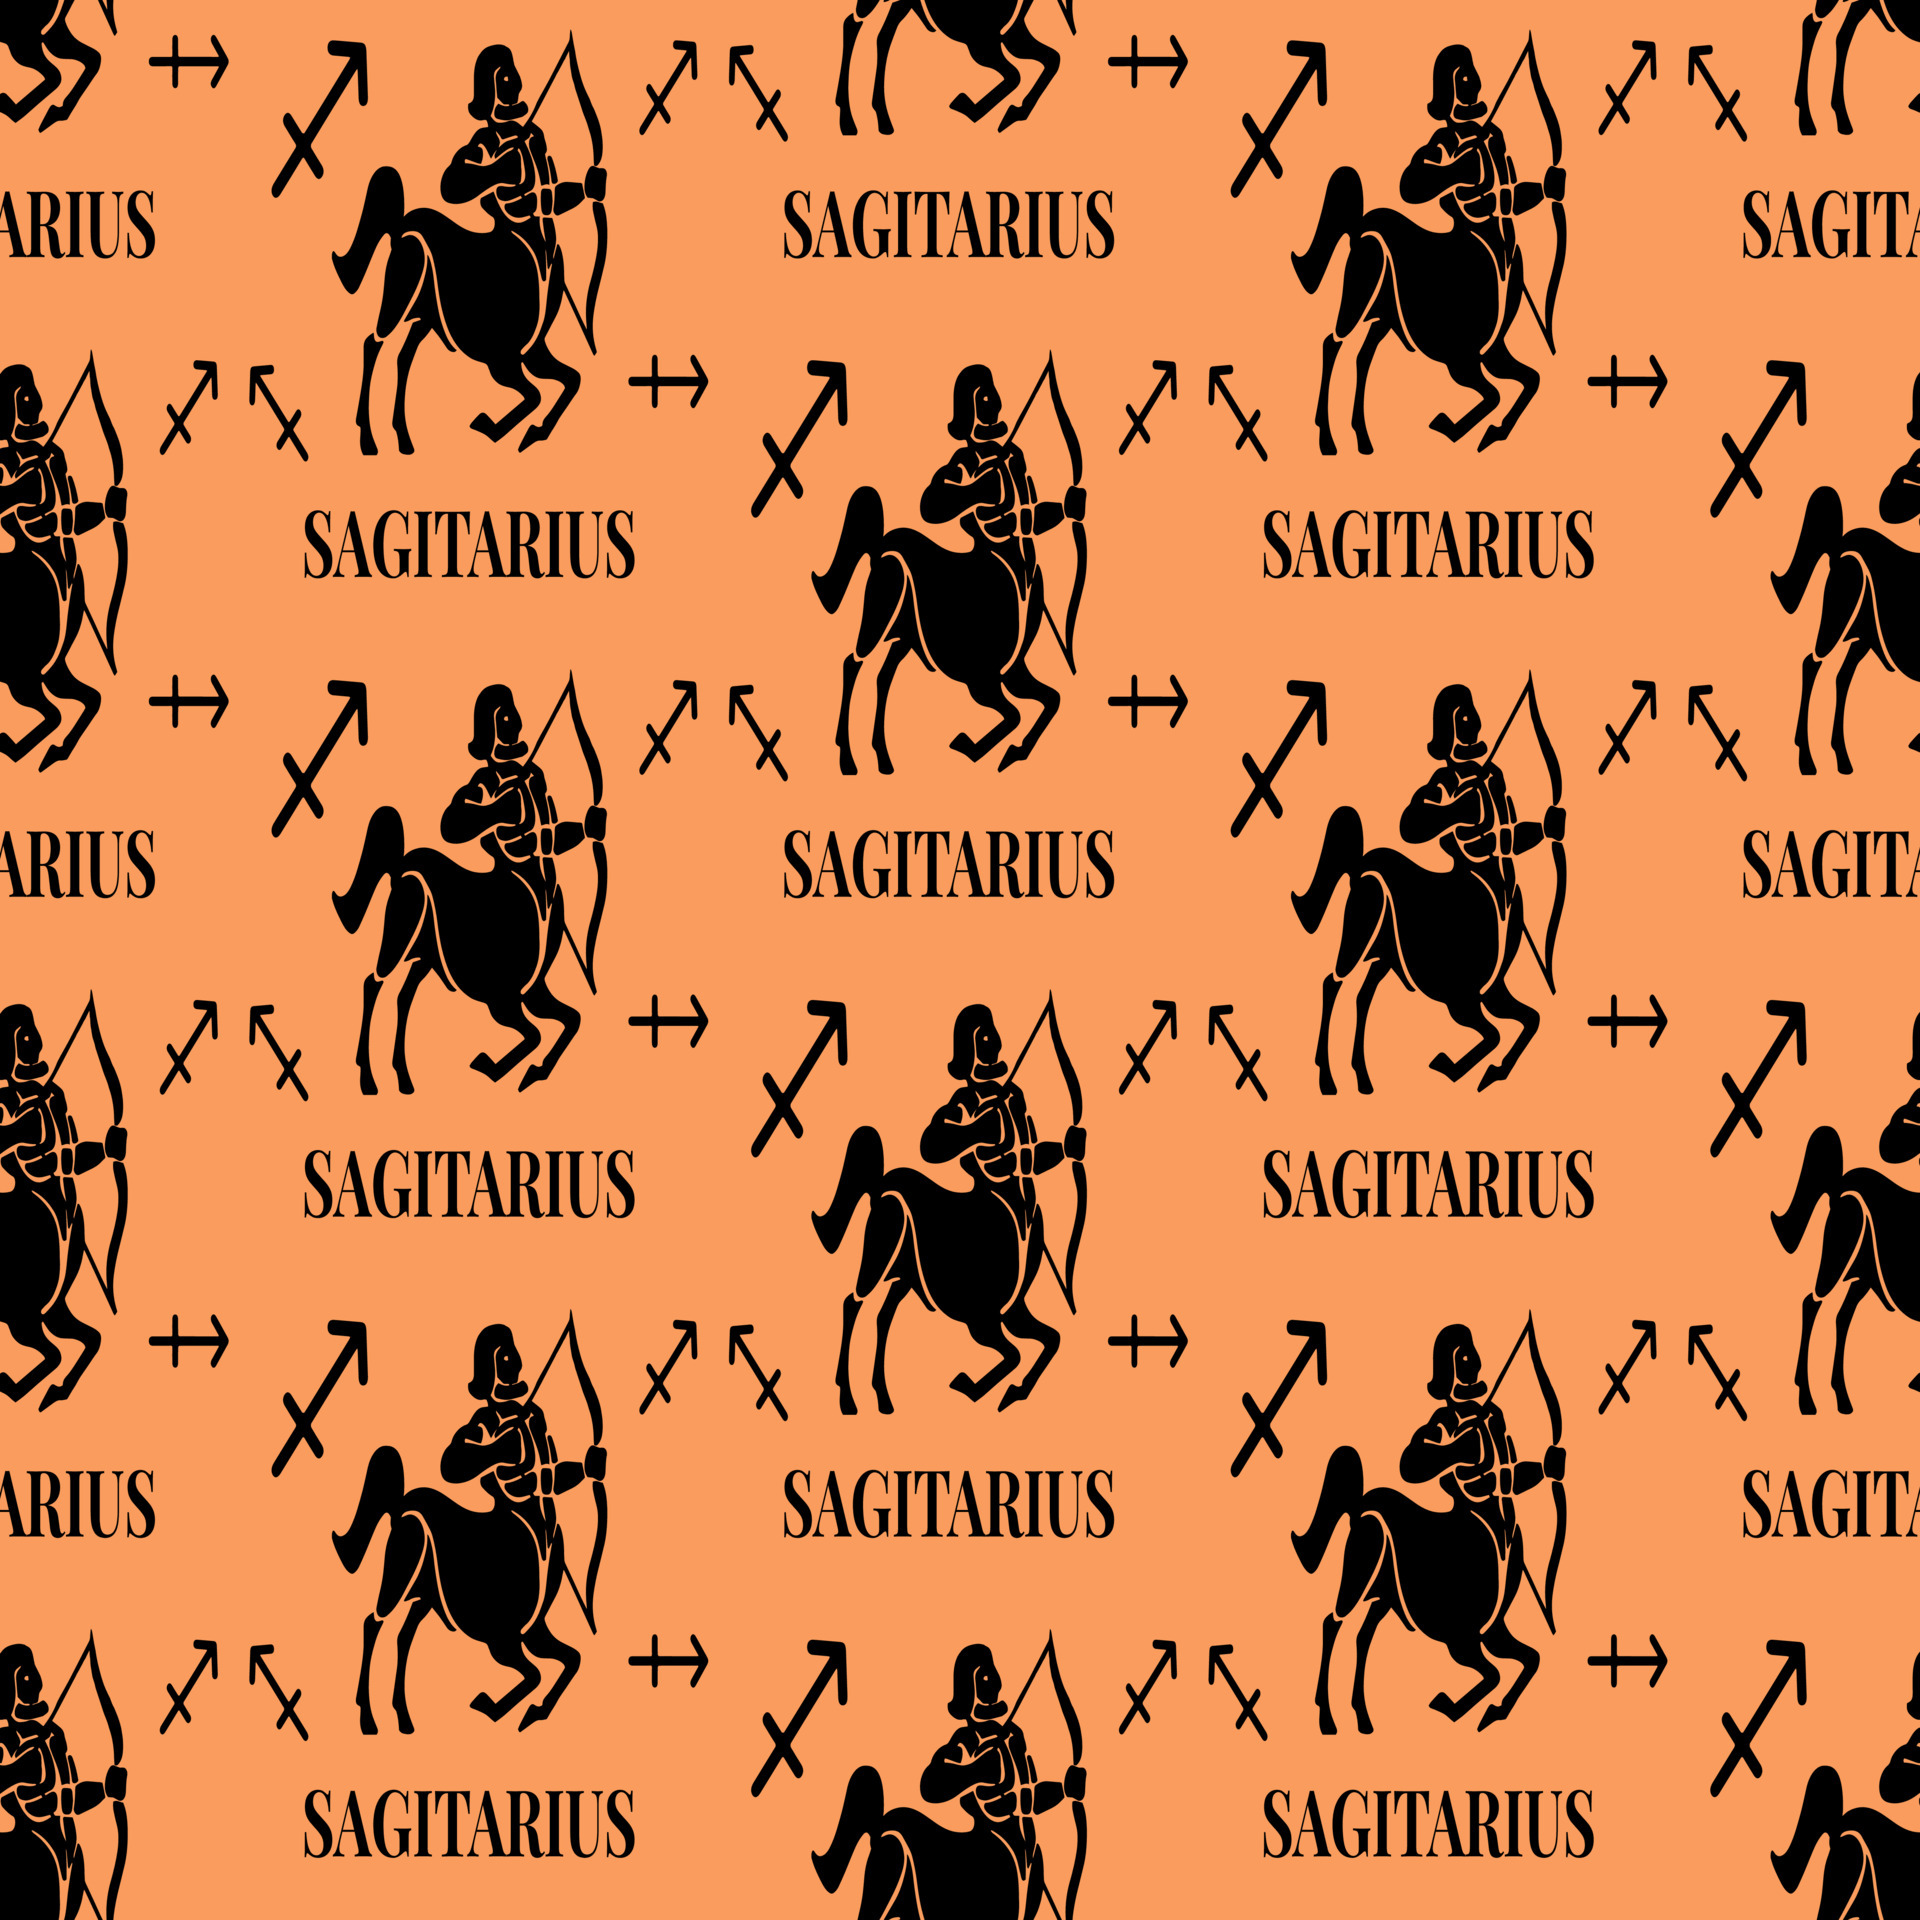 Sagittarius Wallpaper  NawPic